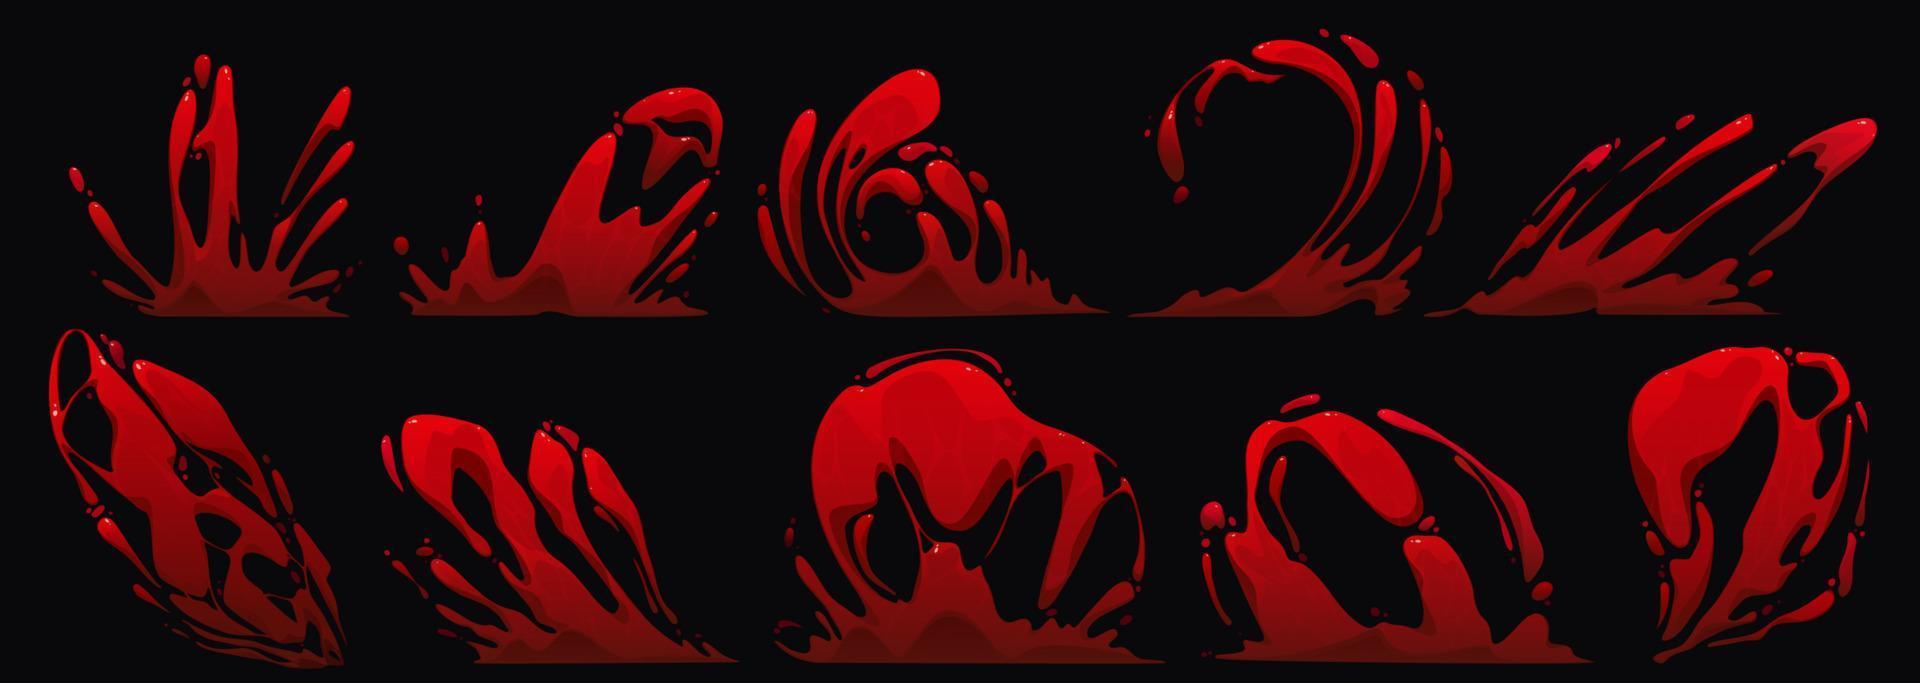 Blood splash, vfx game video animation effect, set vector